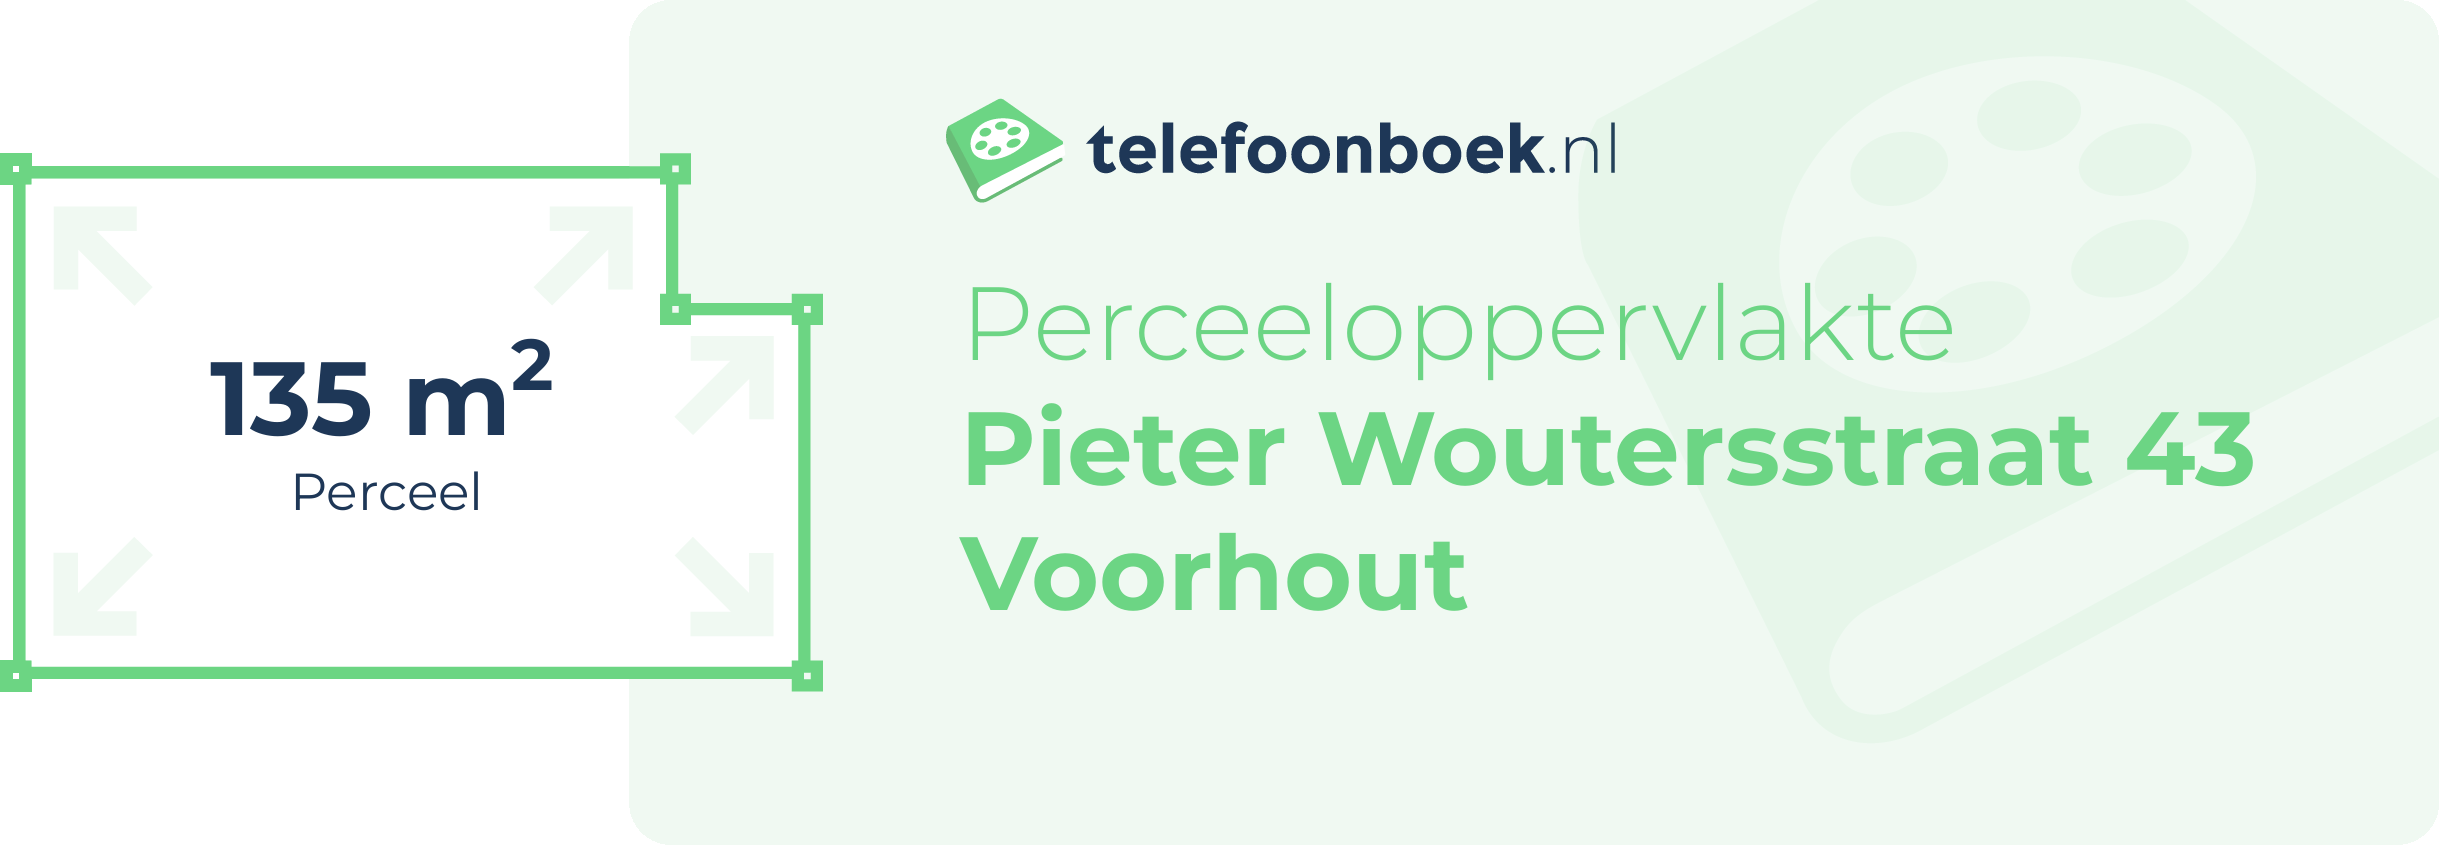 Perceeloppervlakte Pieter Woutersstraat 43 Voorhout